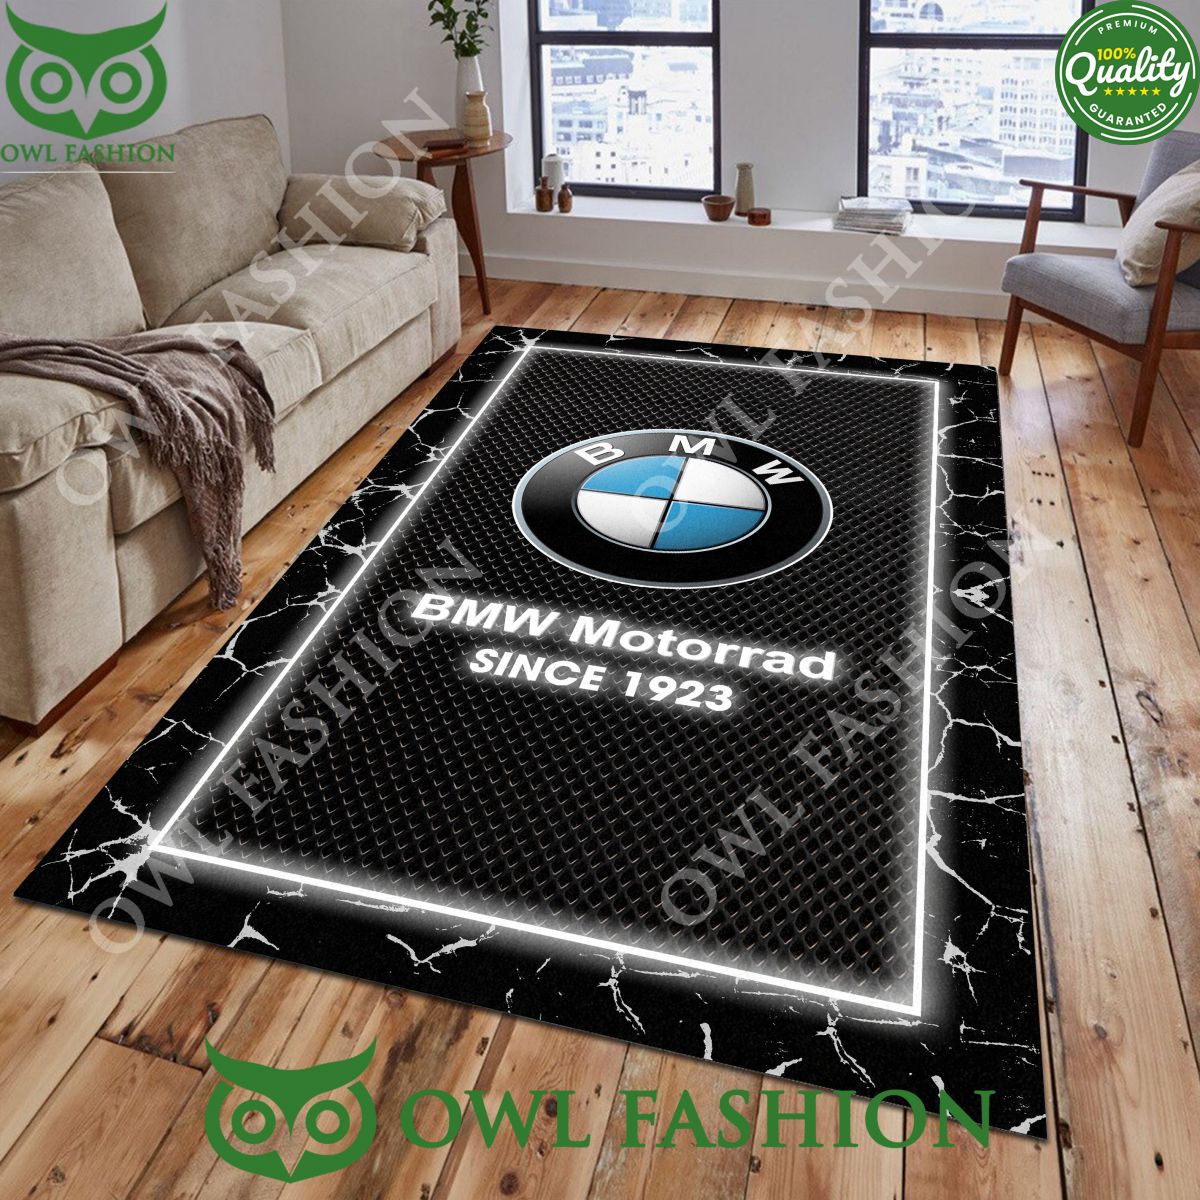 BMW Motorrad Luxury Motor Car Brand Custom Living Carpet Rug